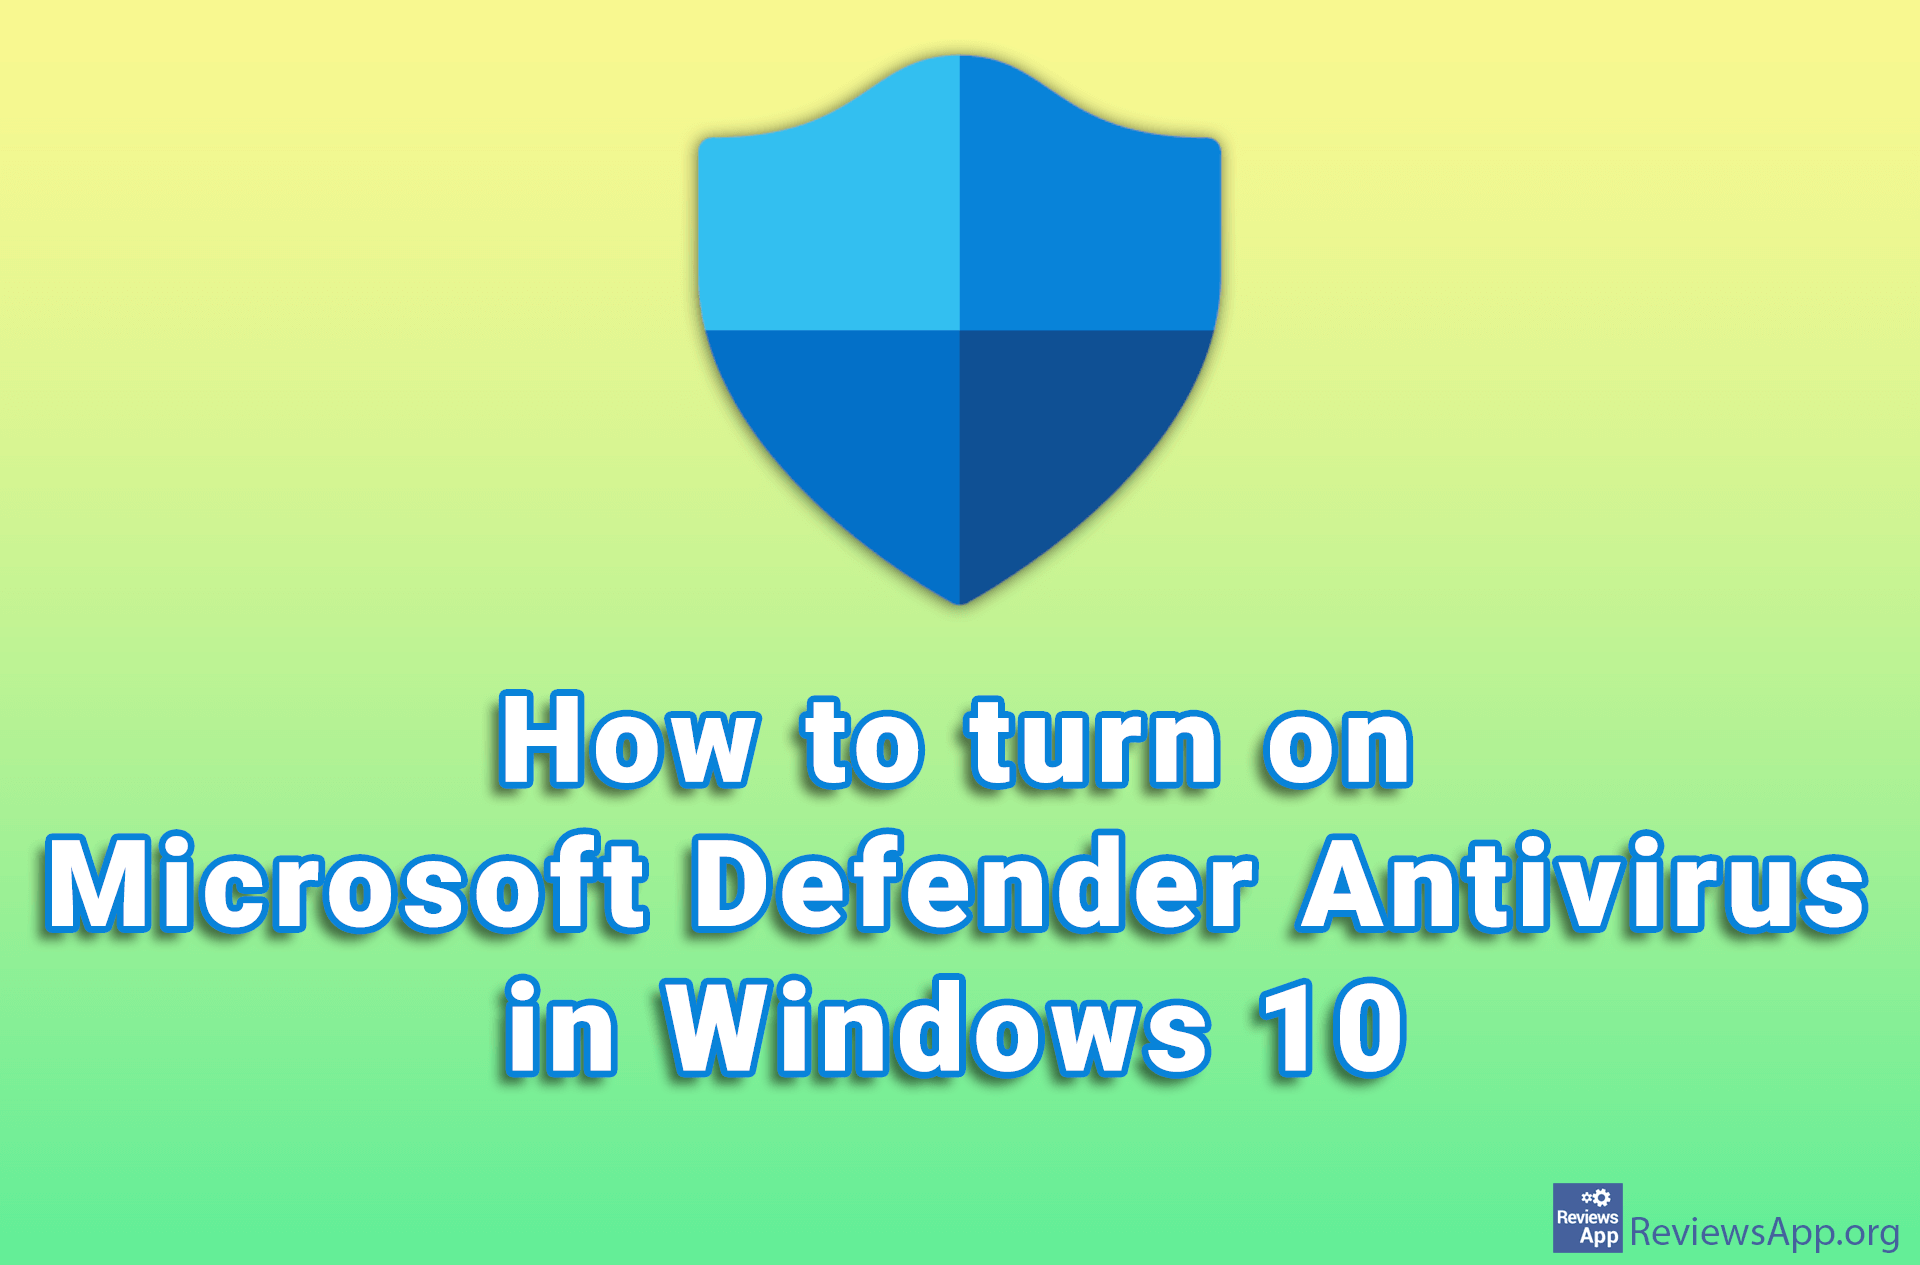 How to turn on Microsoft Defender Antivirus in Windows 10